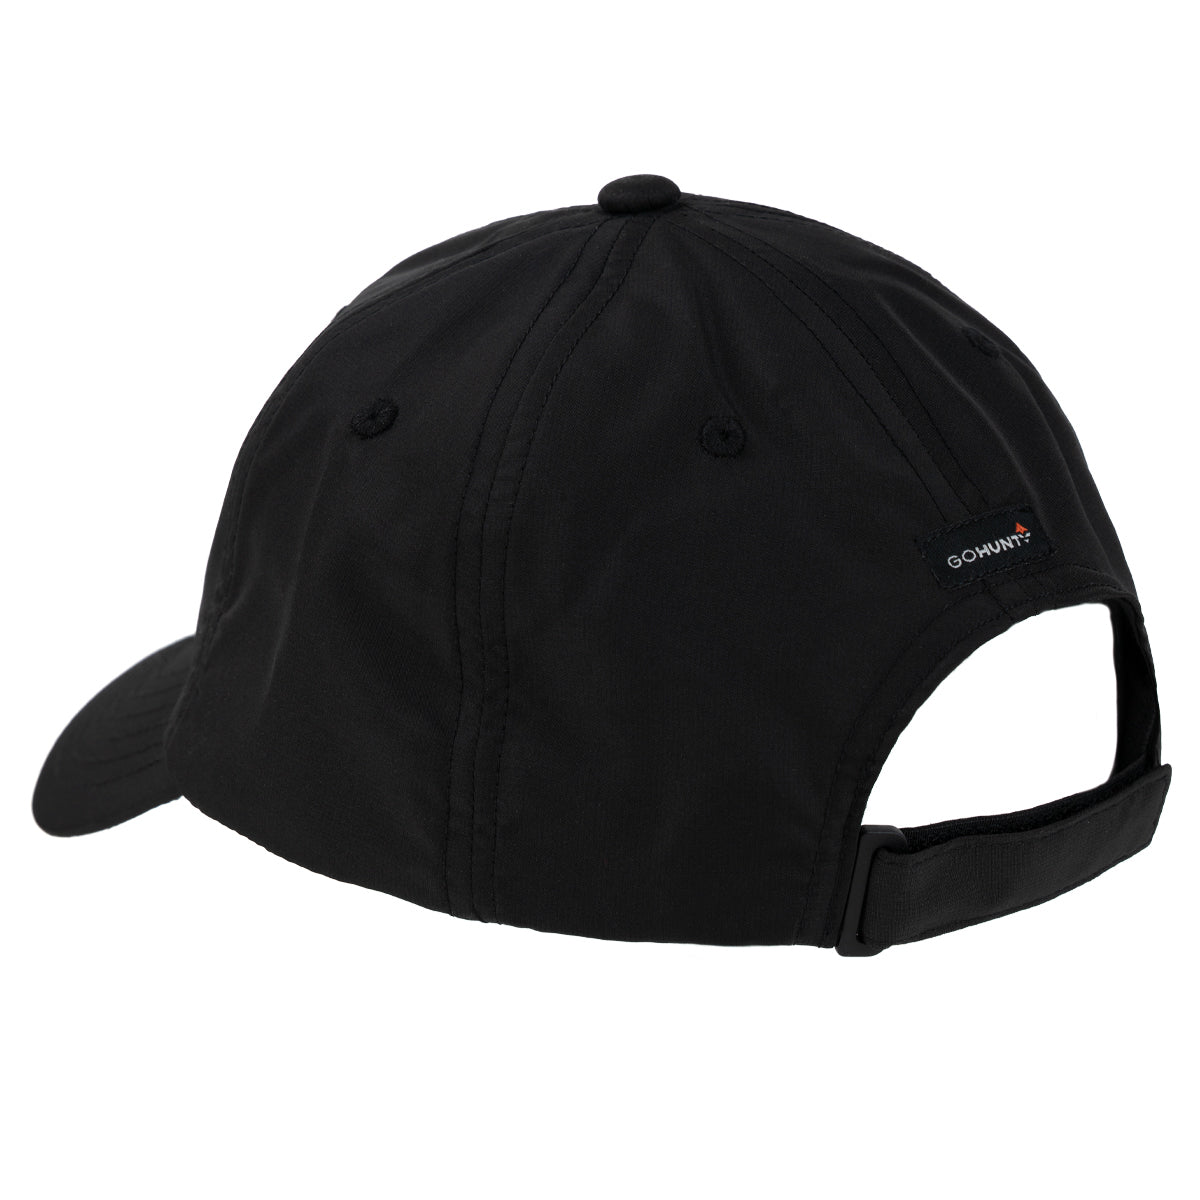 GOHUNT Tanner Hat in Black by GOHUNT | GOHUNT - GOHUNT Shop